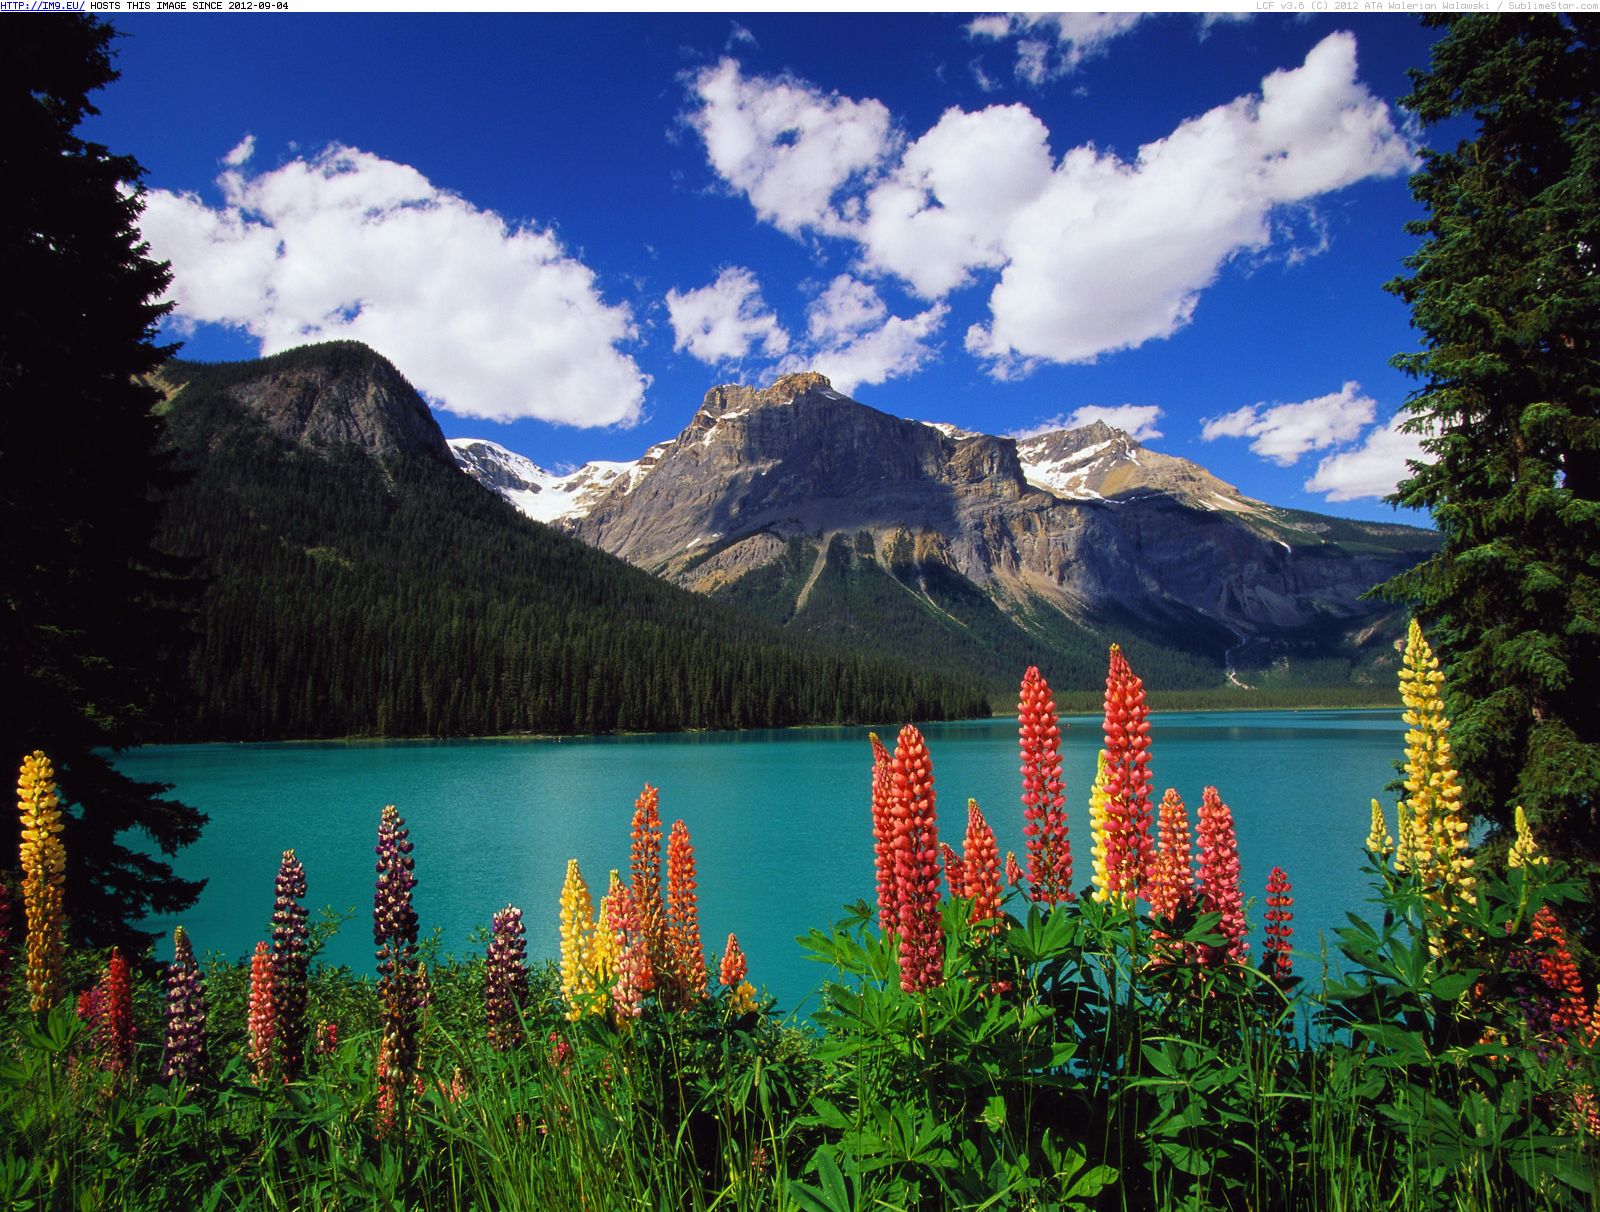 Emerald Lake, Yoho National Park, British Columbia (in Beautiful photos and wallpapers)